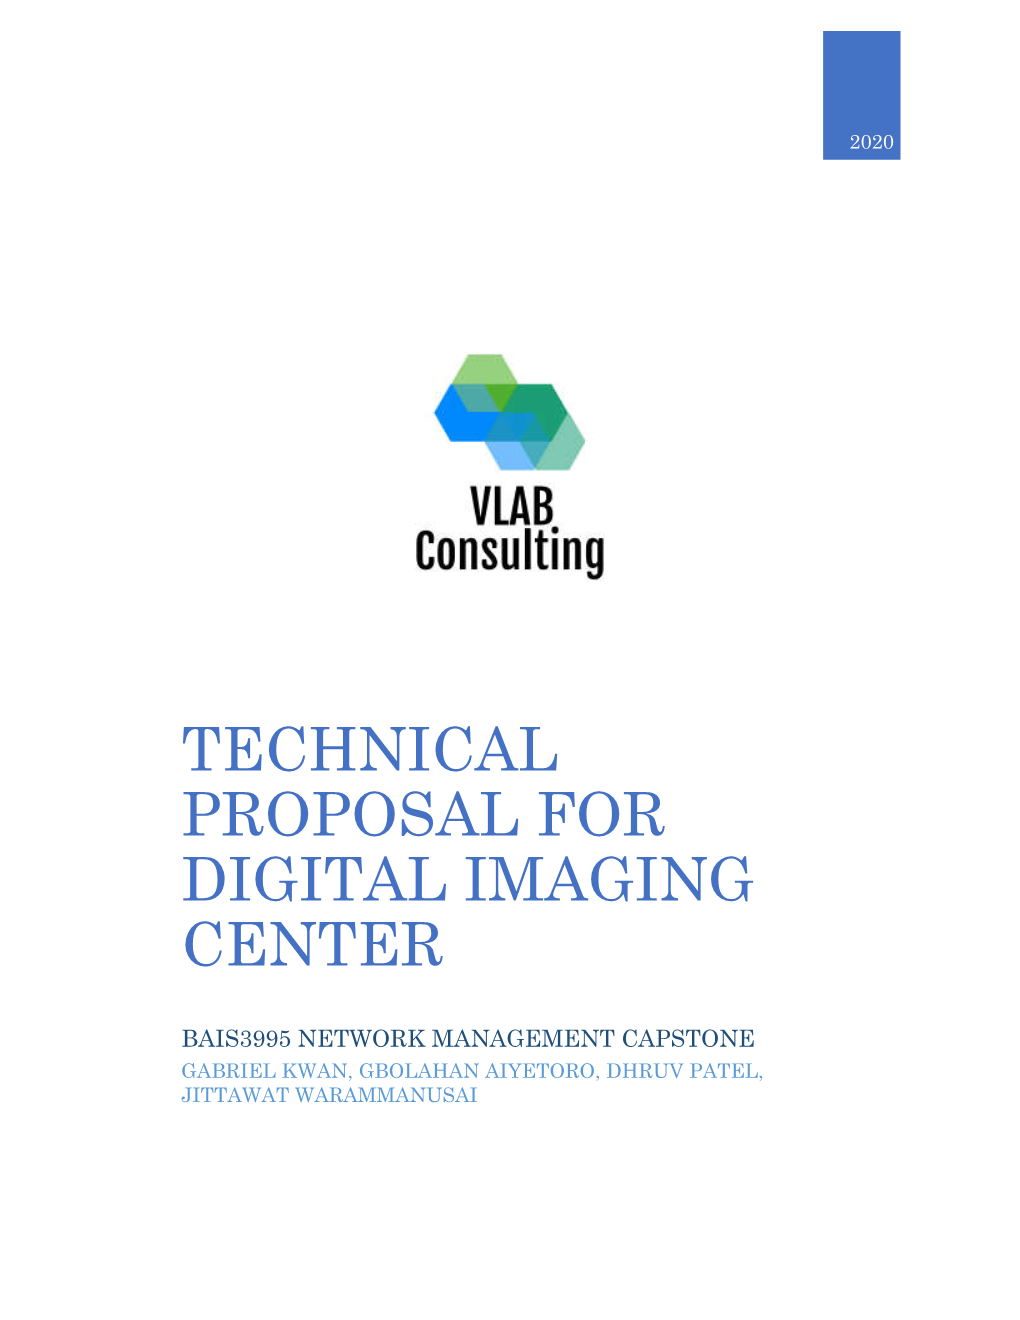 Technical Proposal for Digital Imaging Center